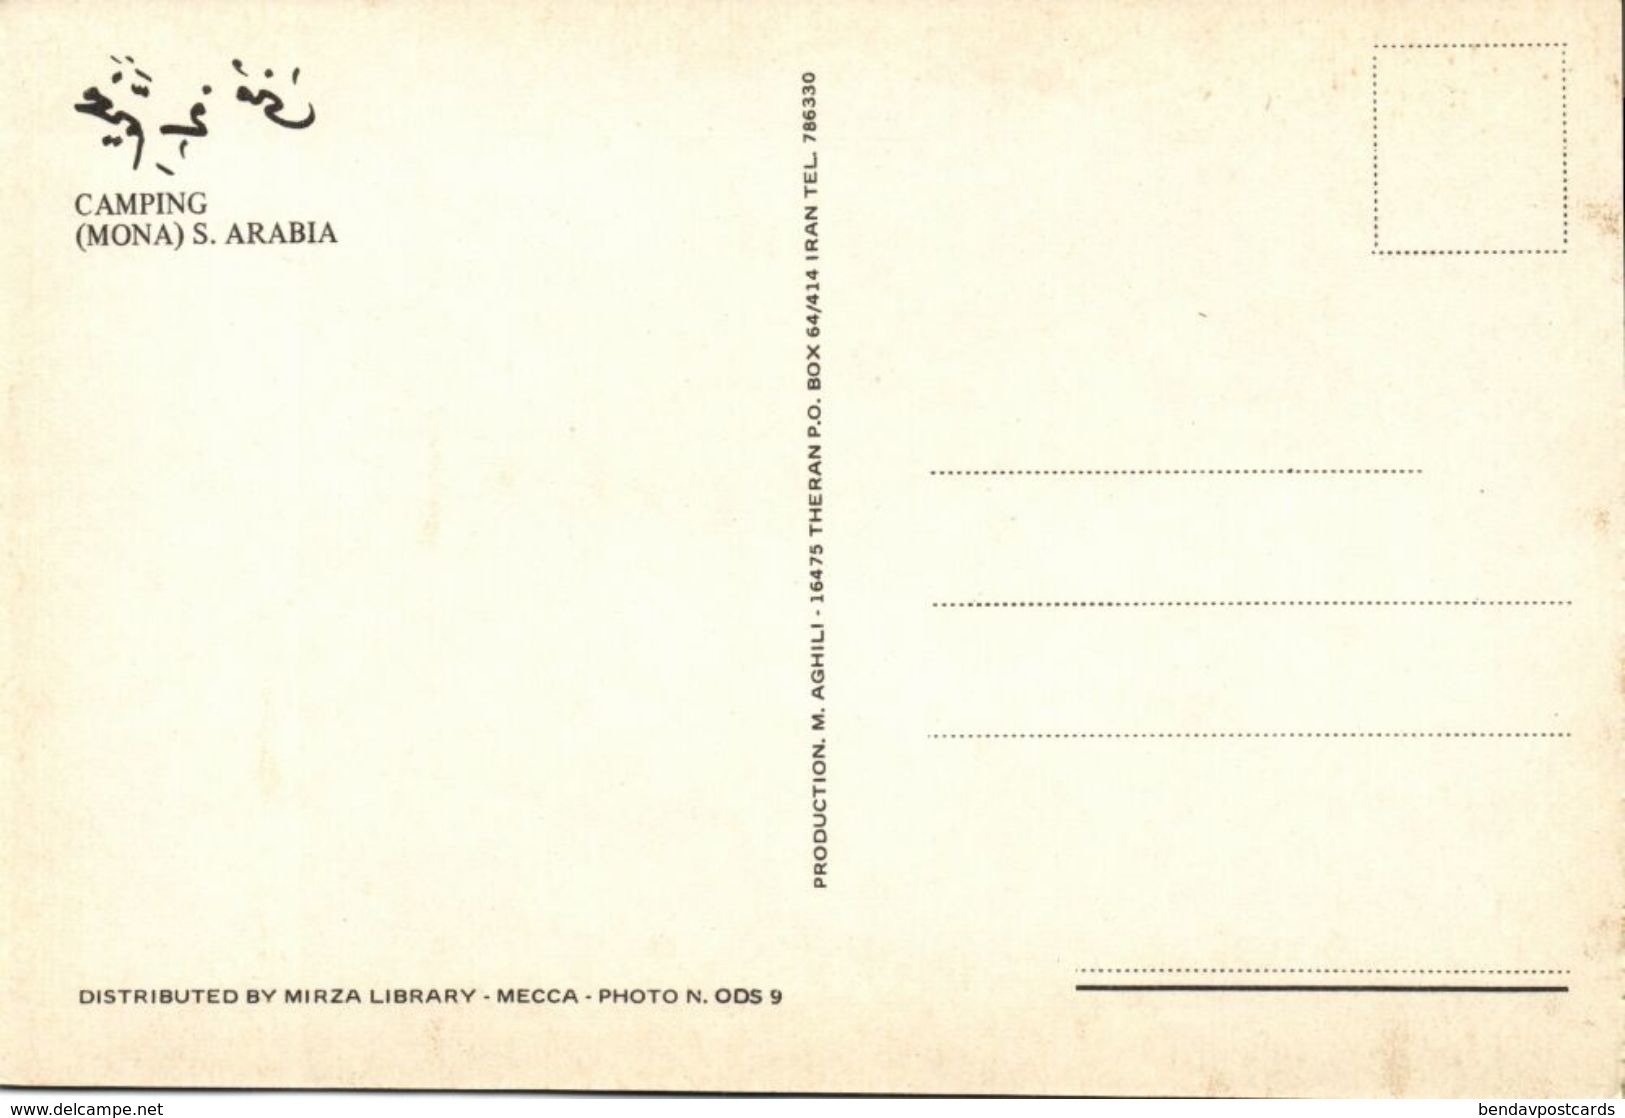 Saudi Arabia, MINA MONA, Pilgrims Camping Tents (1970s) Islam Postcard - Saudi Arabia